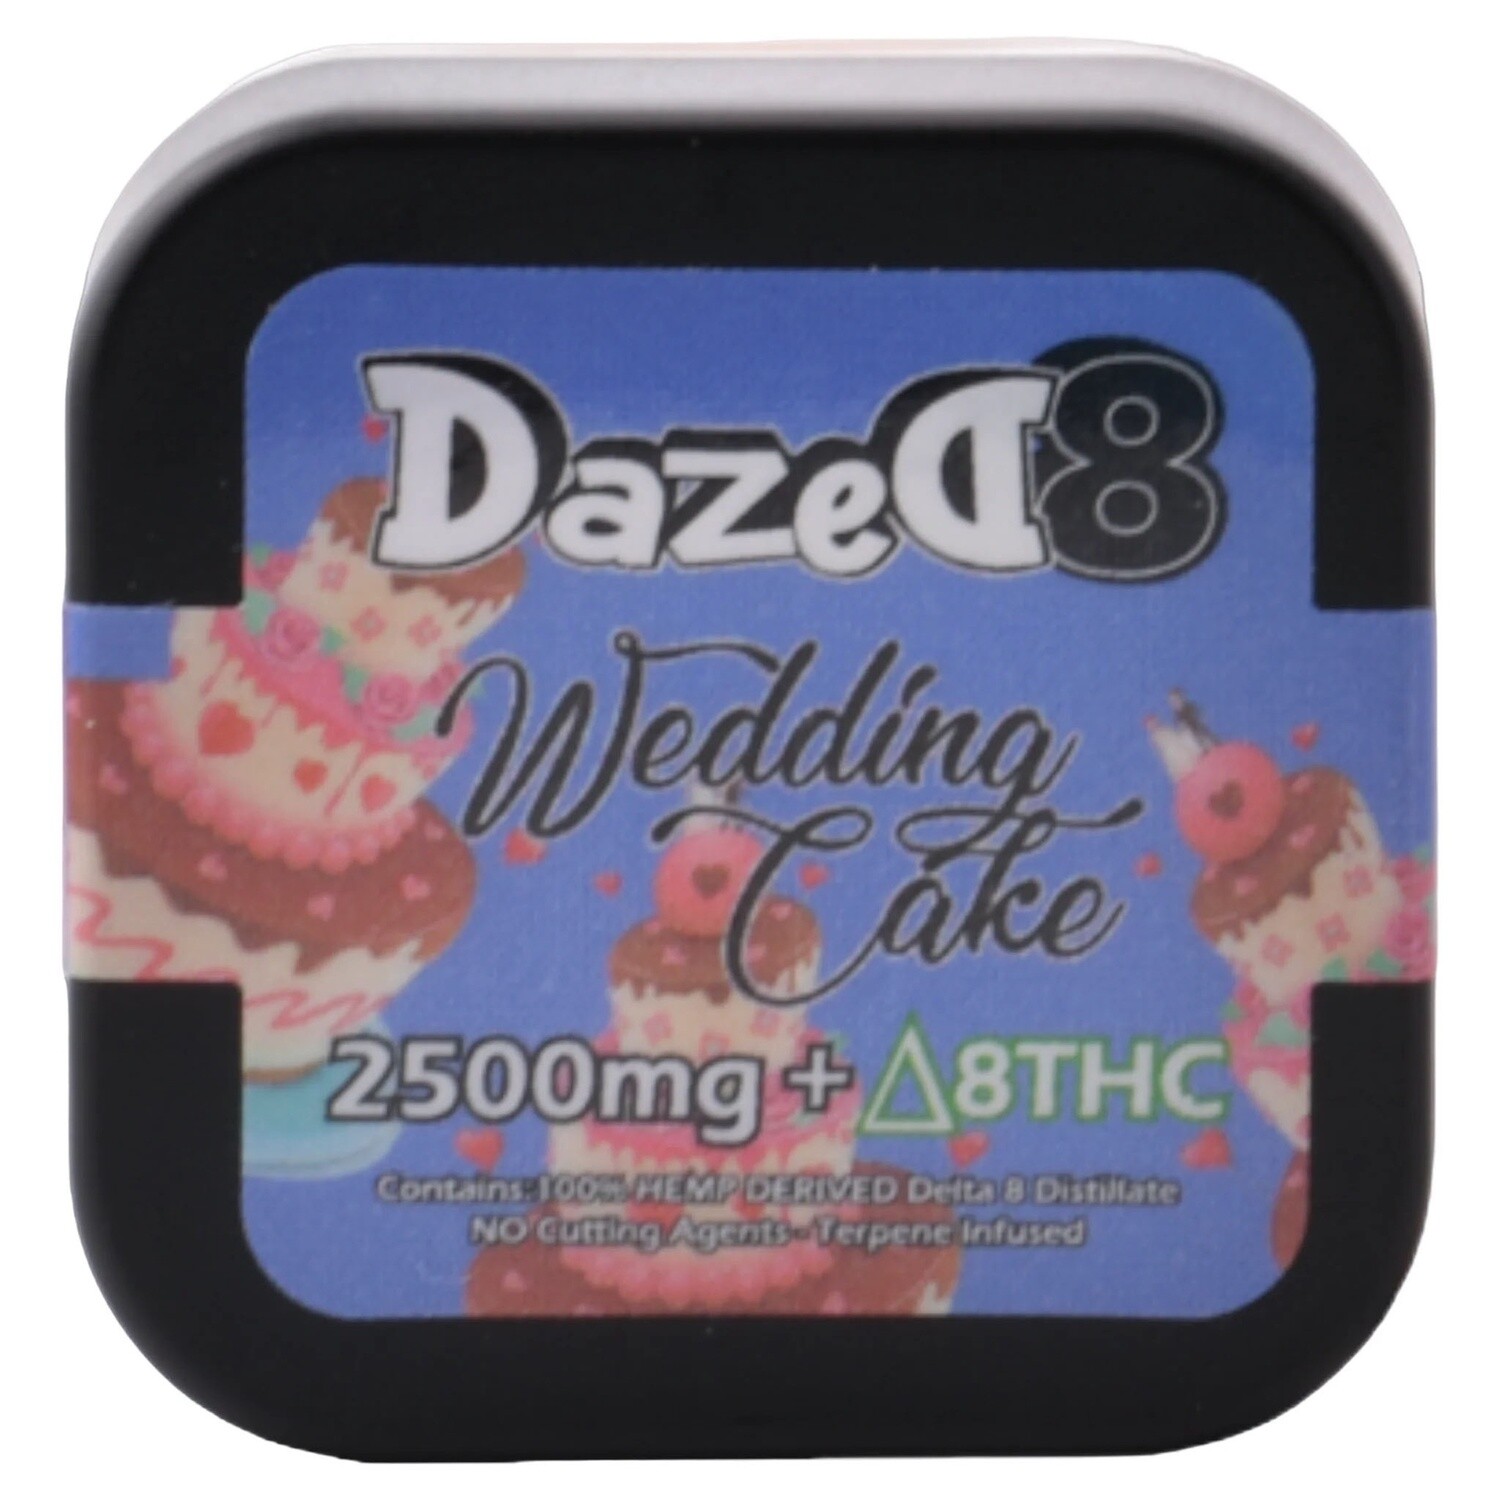 Dazed8, Dab 2.5G - Wedding Cake D8